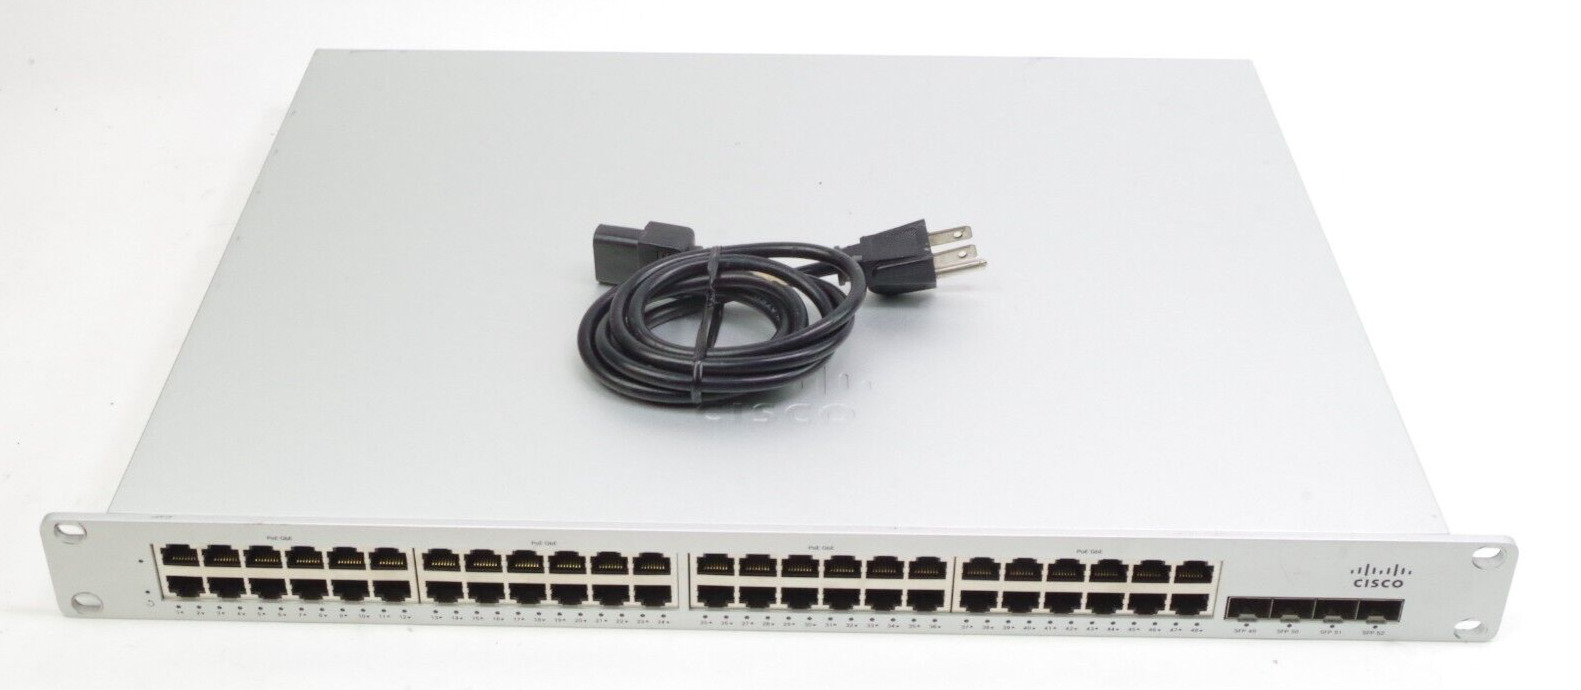 Cisco Meraki MS210-48FP-HW Cloud Managed 48 Port Gigabit Ethernet Switch